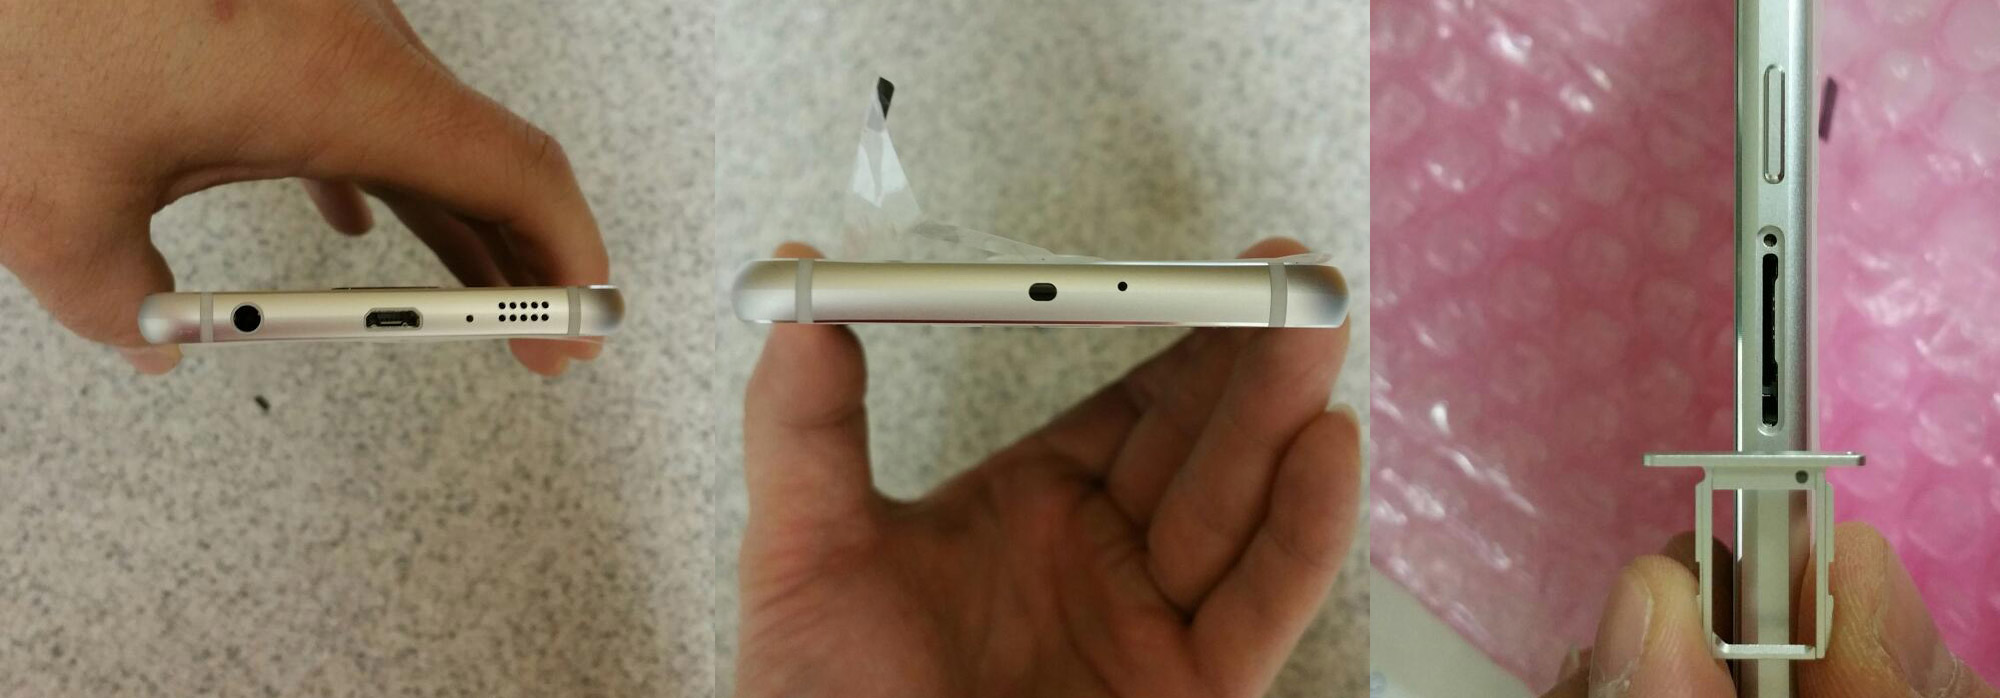 Galaxy S6 Leak